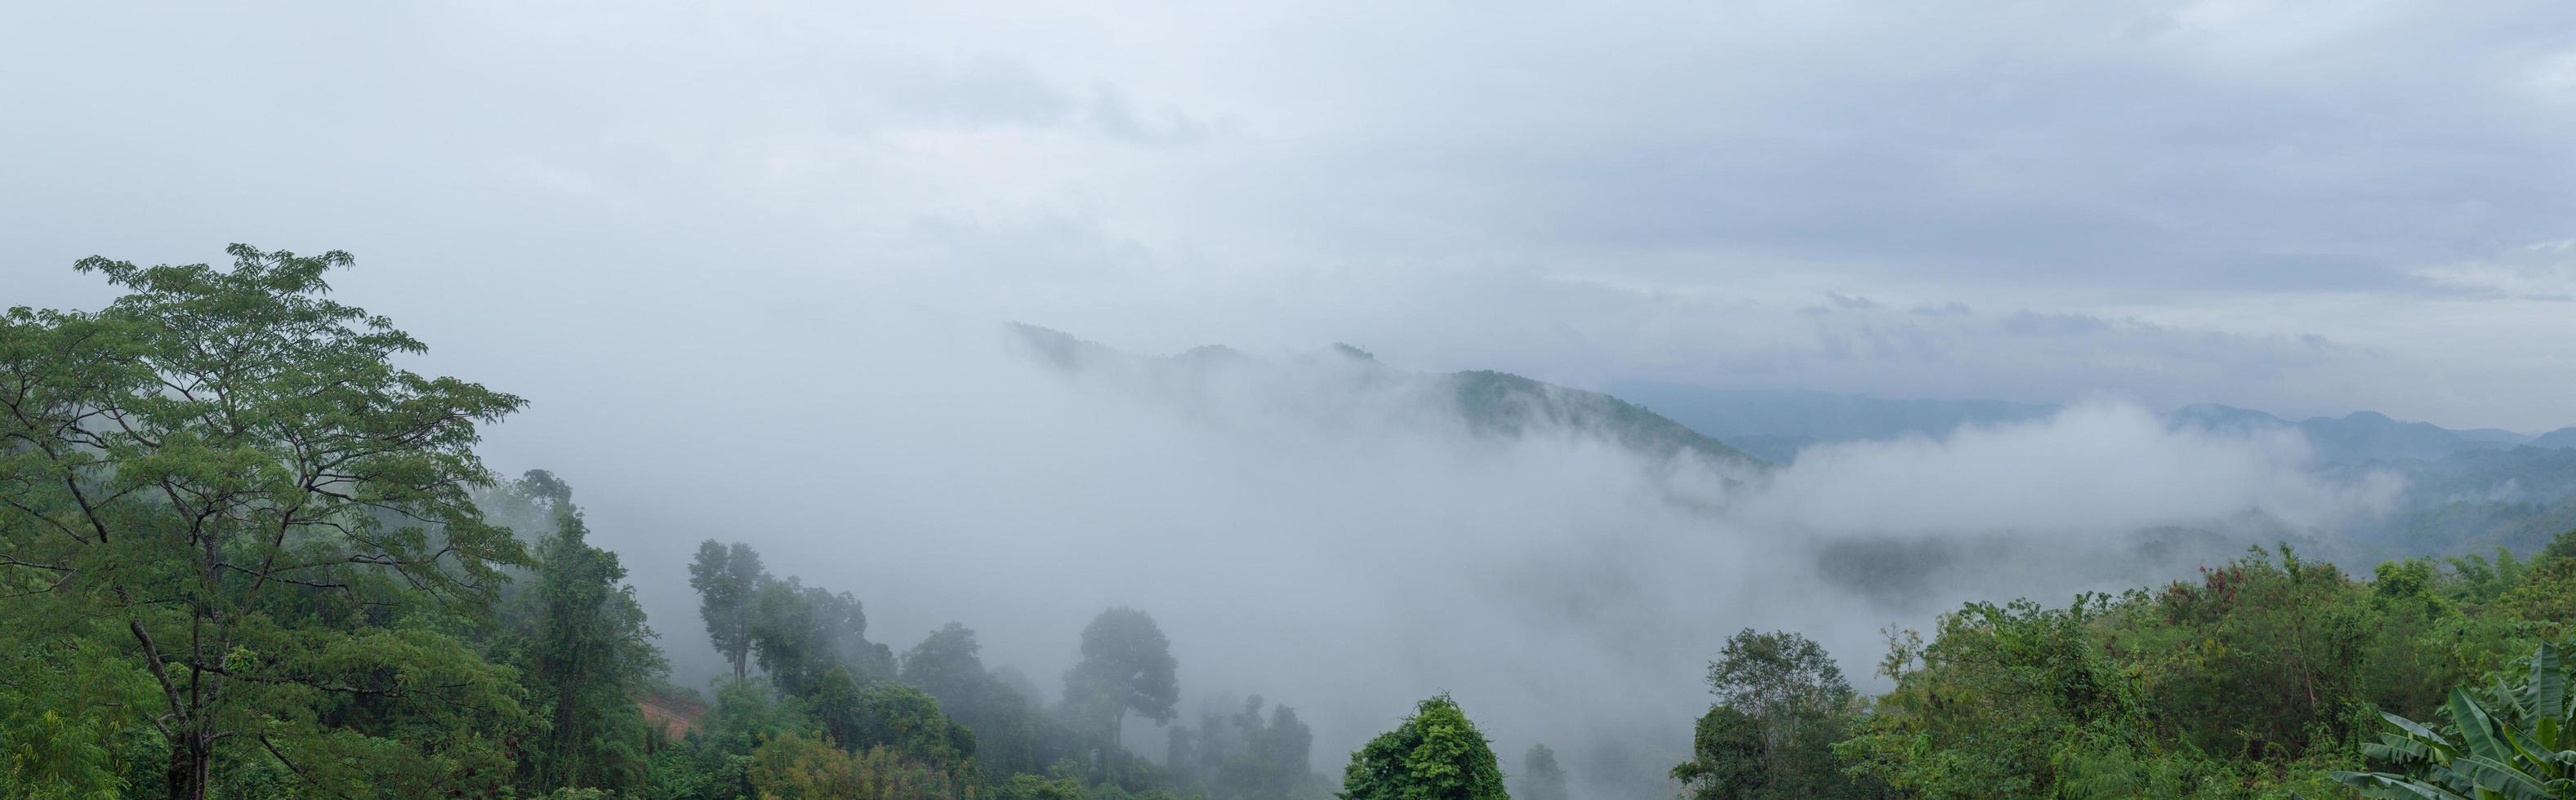 panorama di alberi coperti di nebbia foto